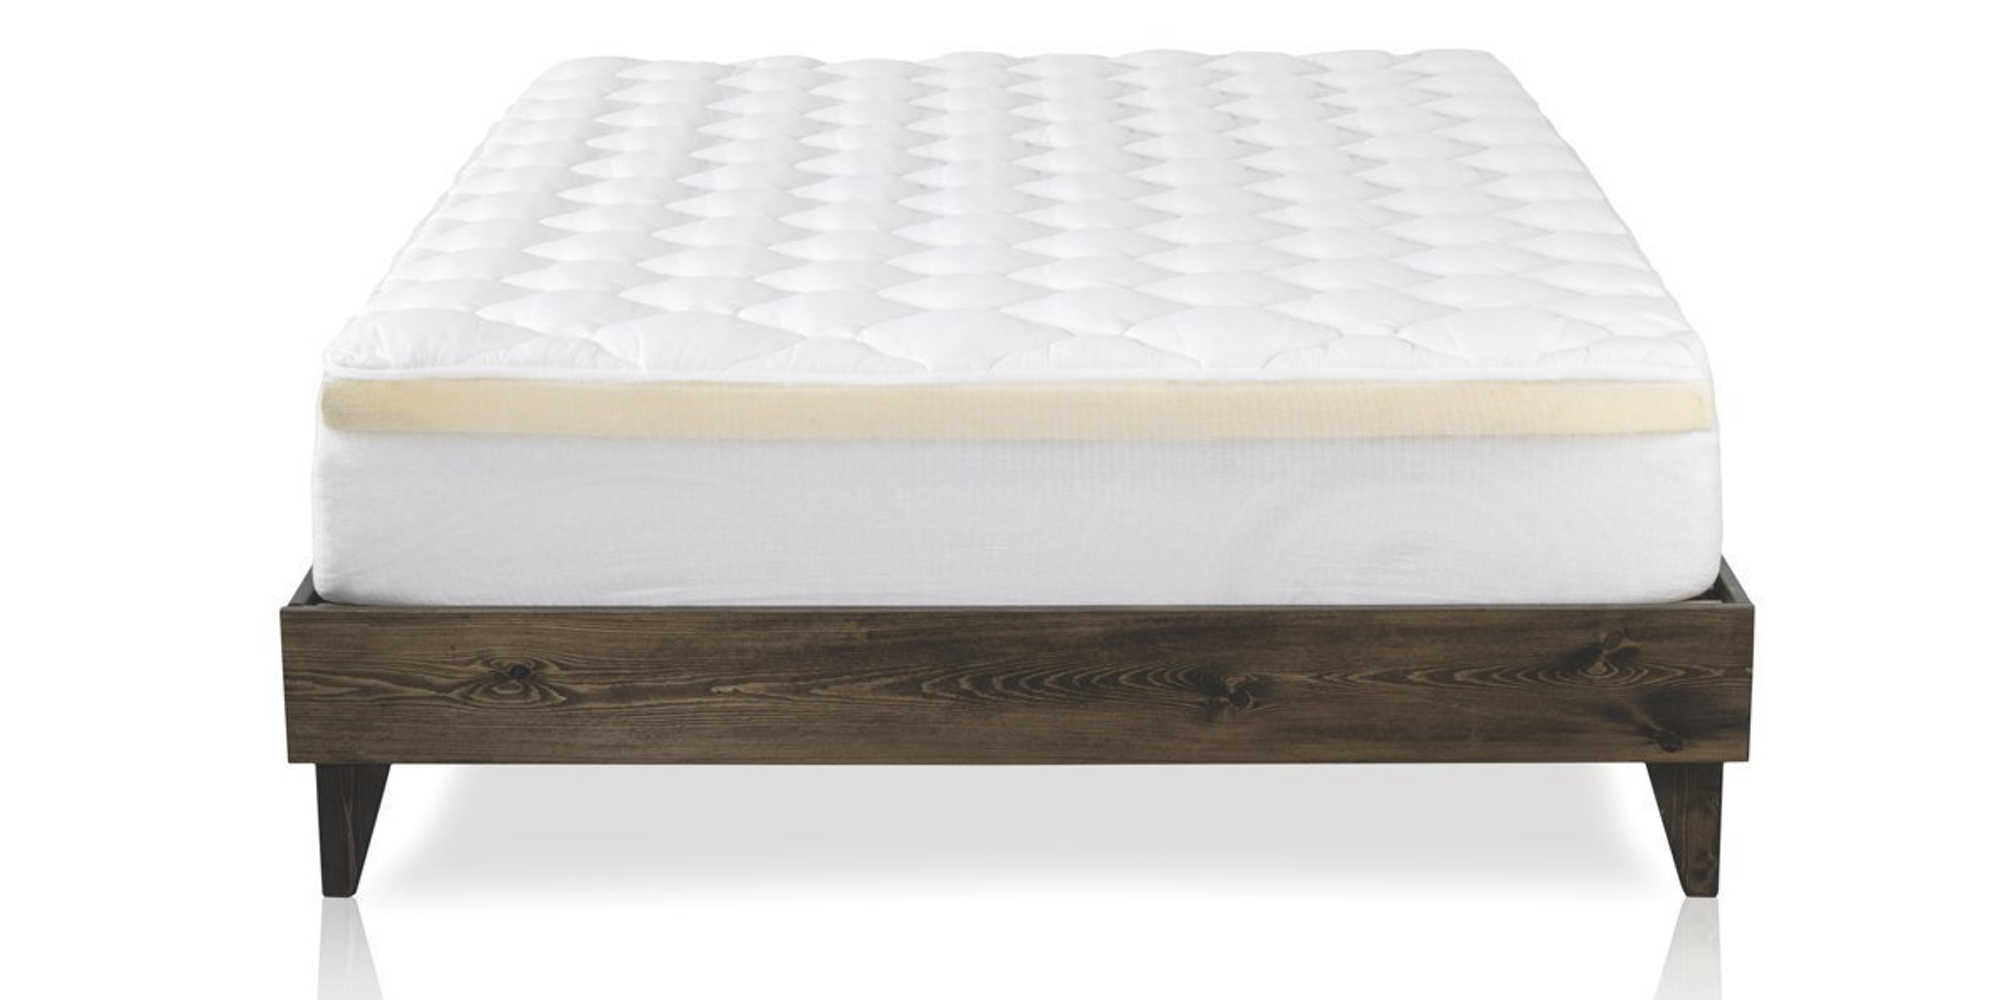 super thick mattress pad